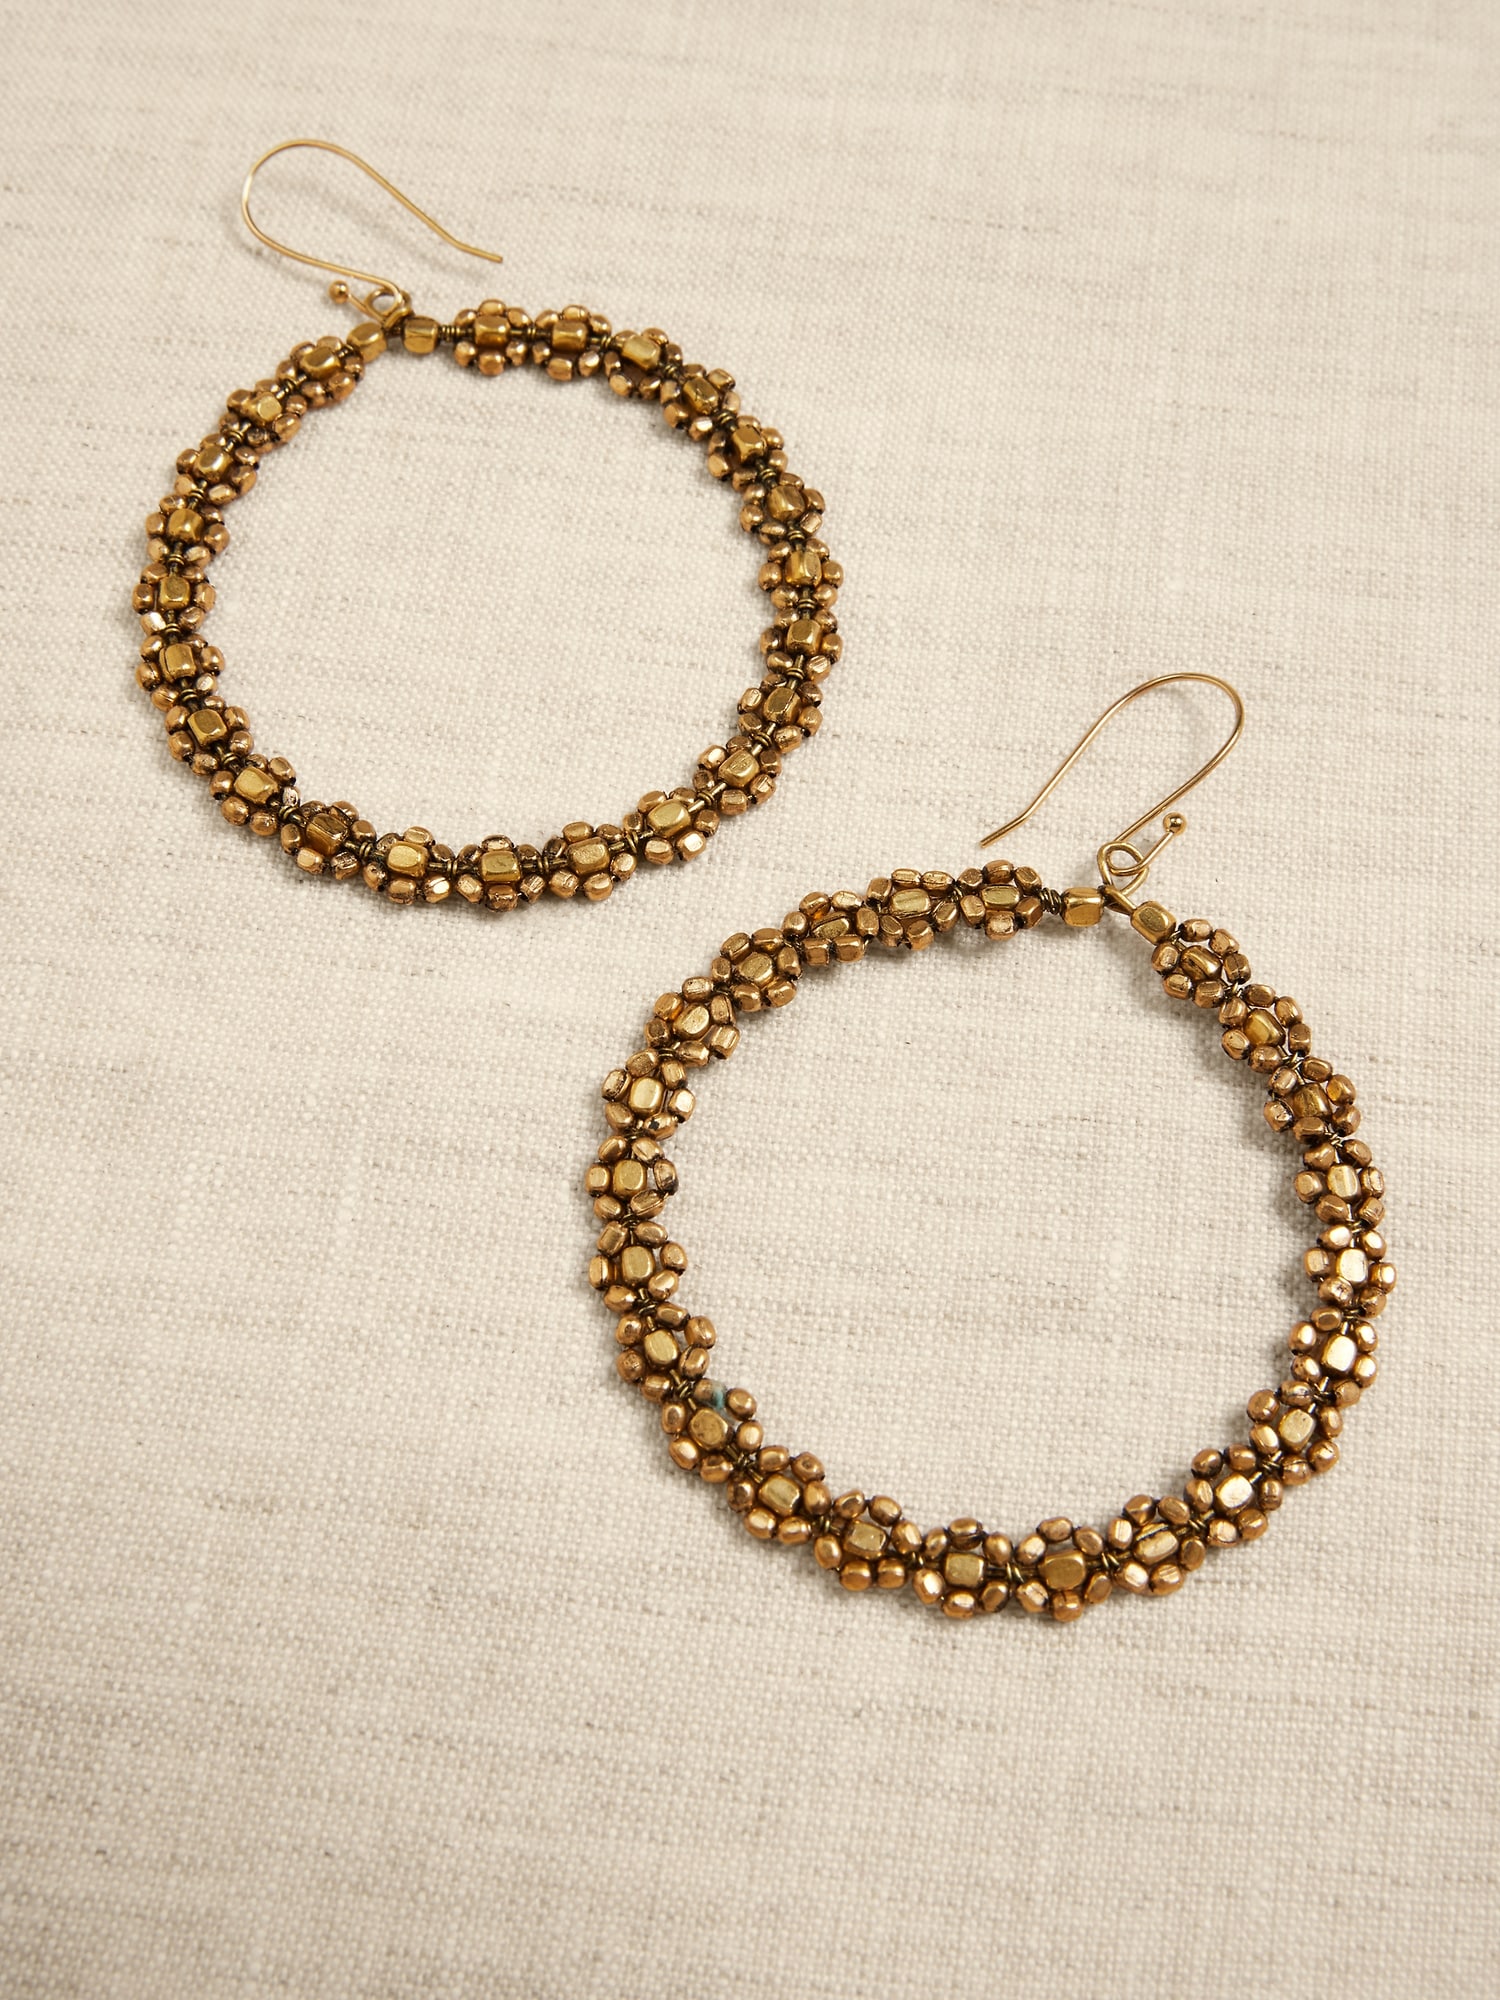 Gold Bead Earrings &#124 Aureus + Argent